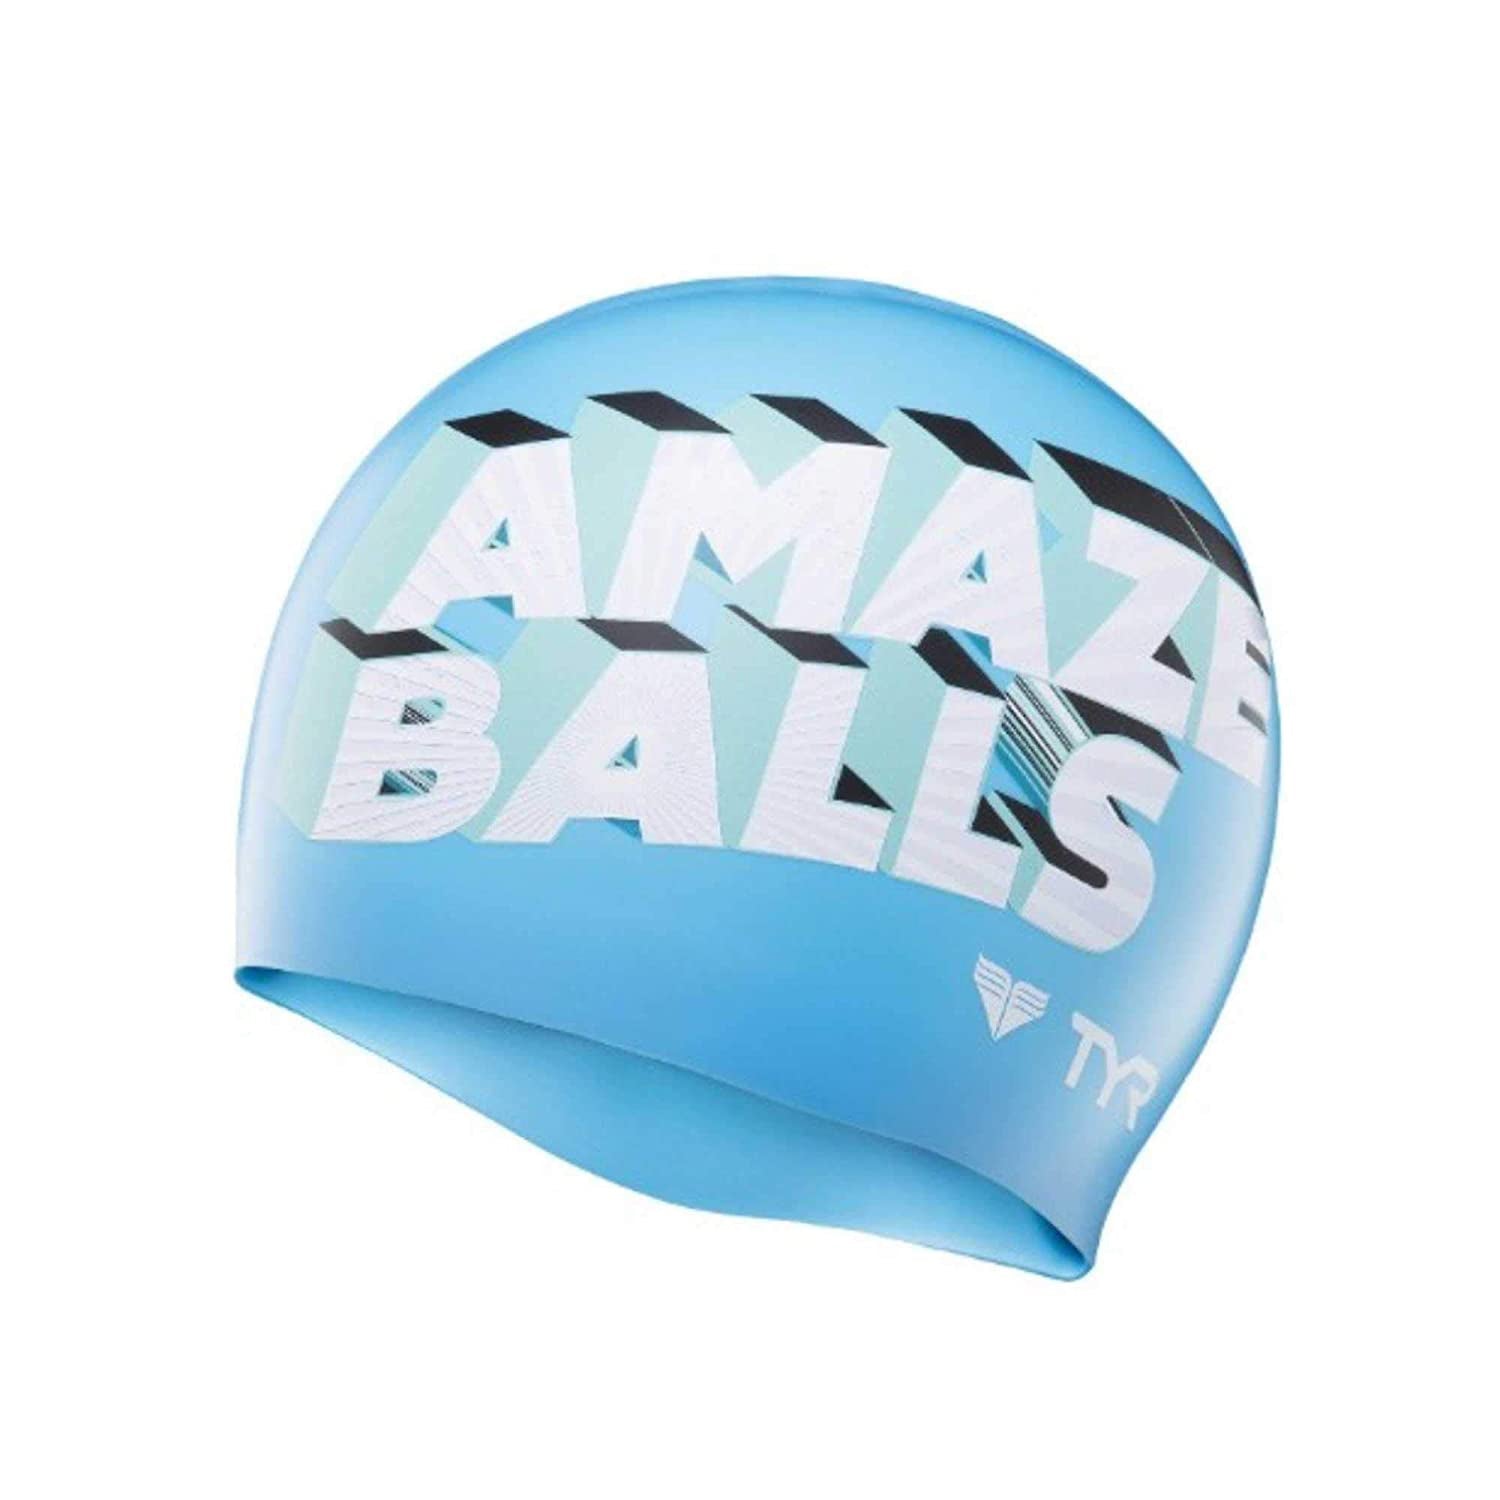 TYR Amaze Balls Swim Cap, Blue/White - Best Price online Prokicksports.com